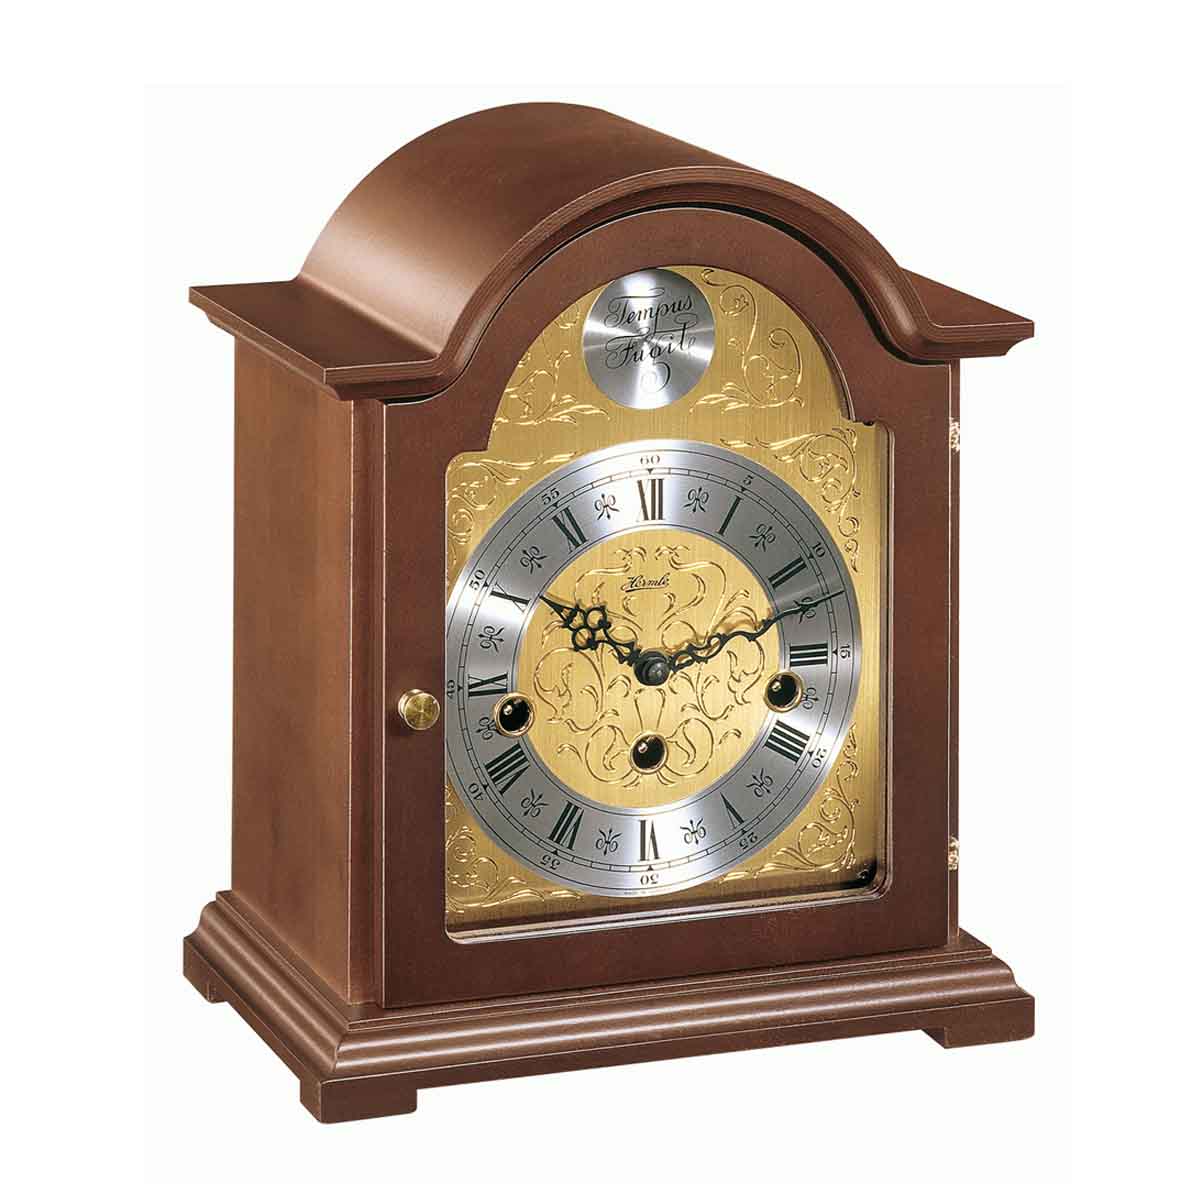 BETHNAL 22511 030340 Mantel Table Clock